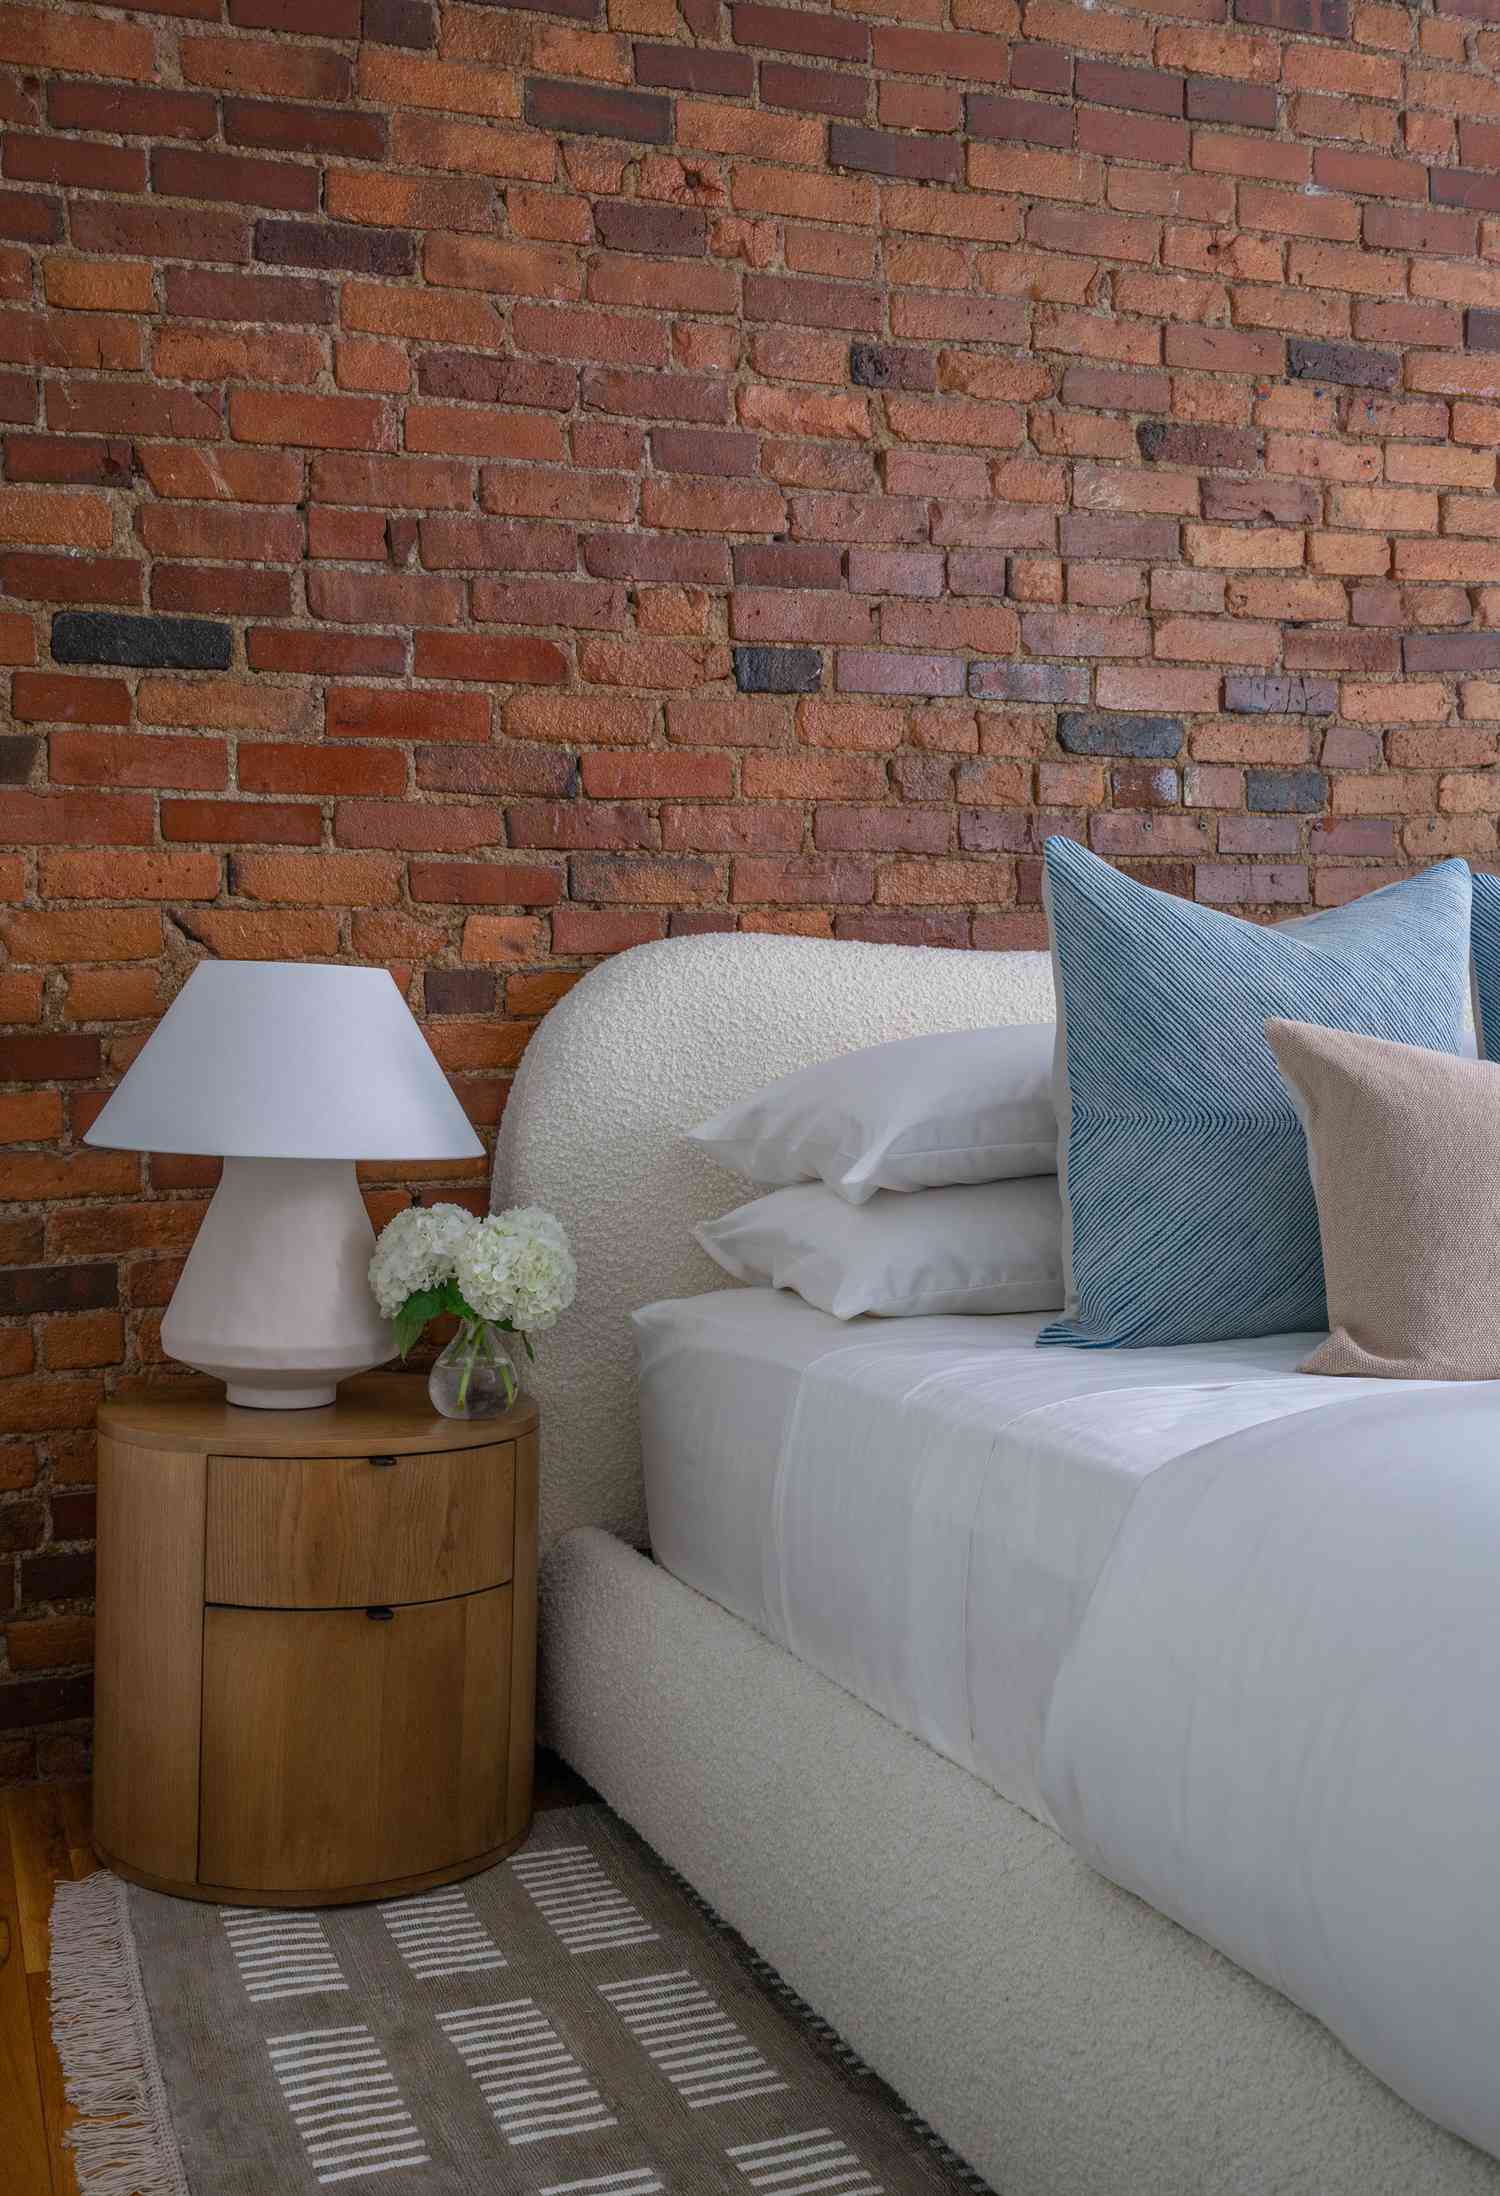 apartment bedroom ideas work with brick